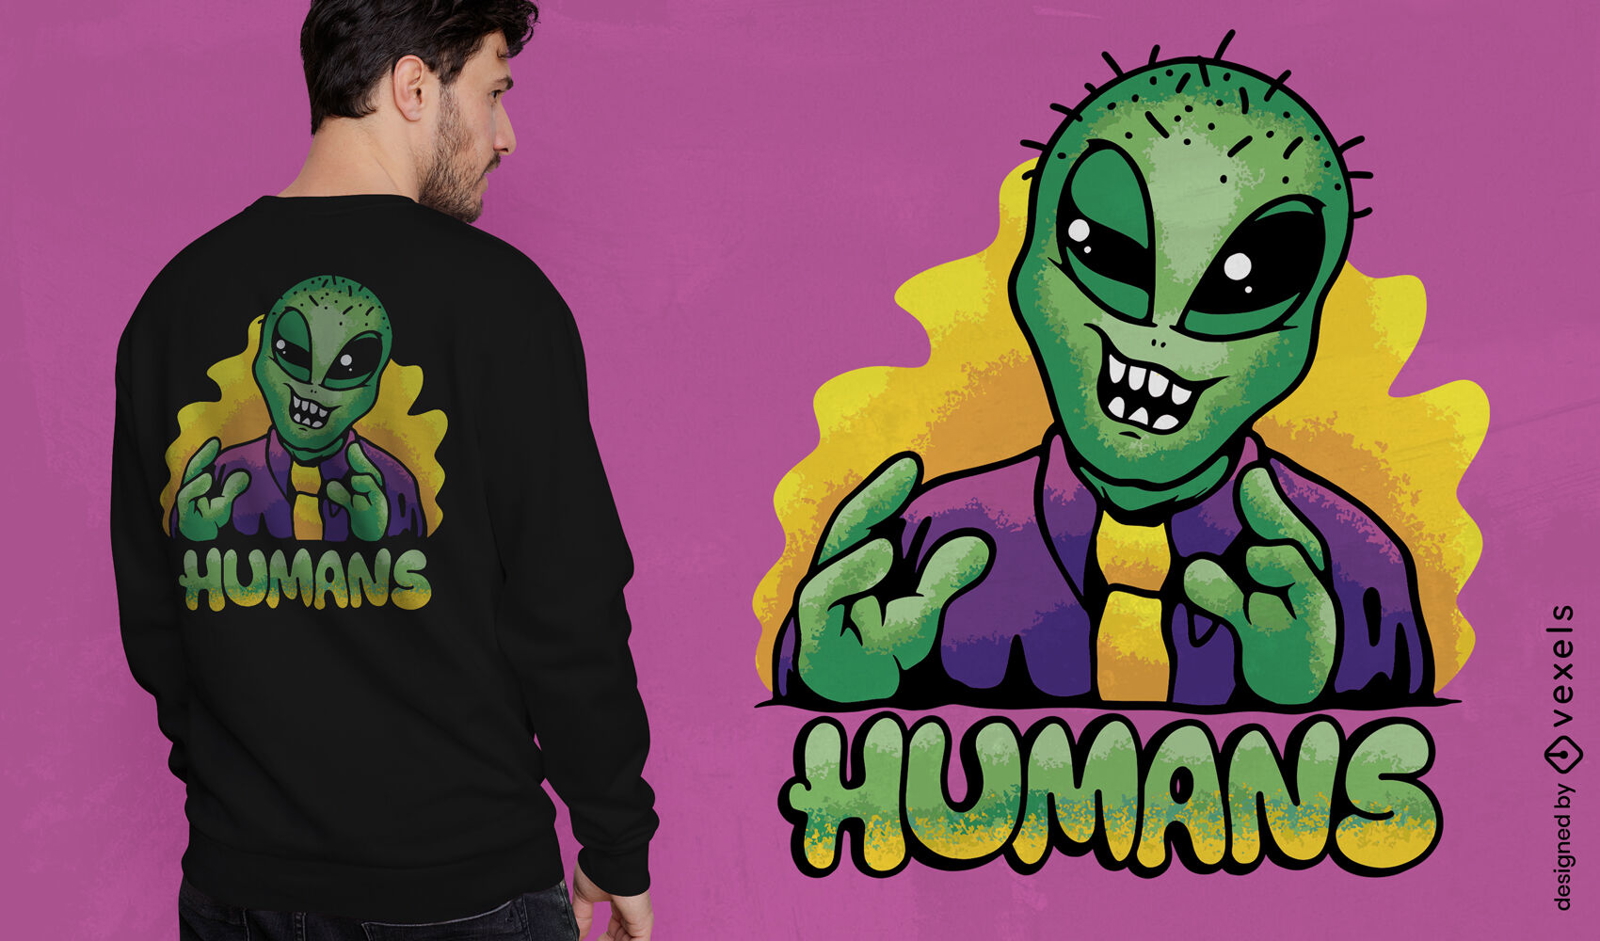 Funny alien creature cartoon t-shirt design